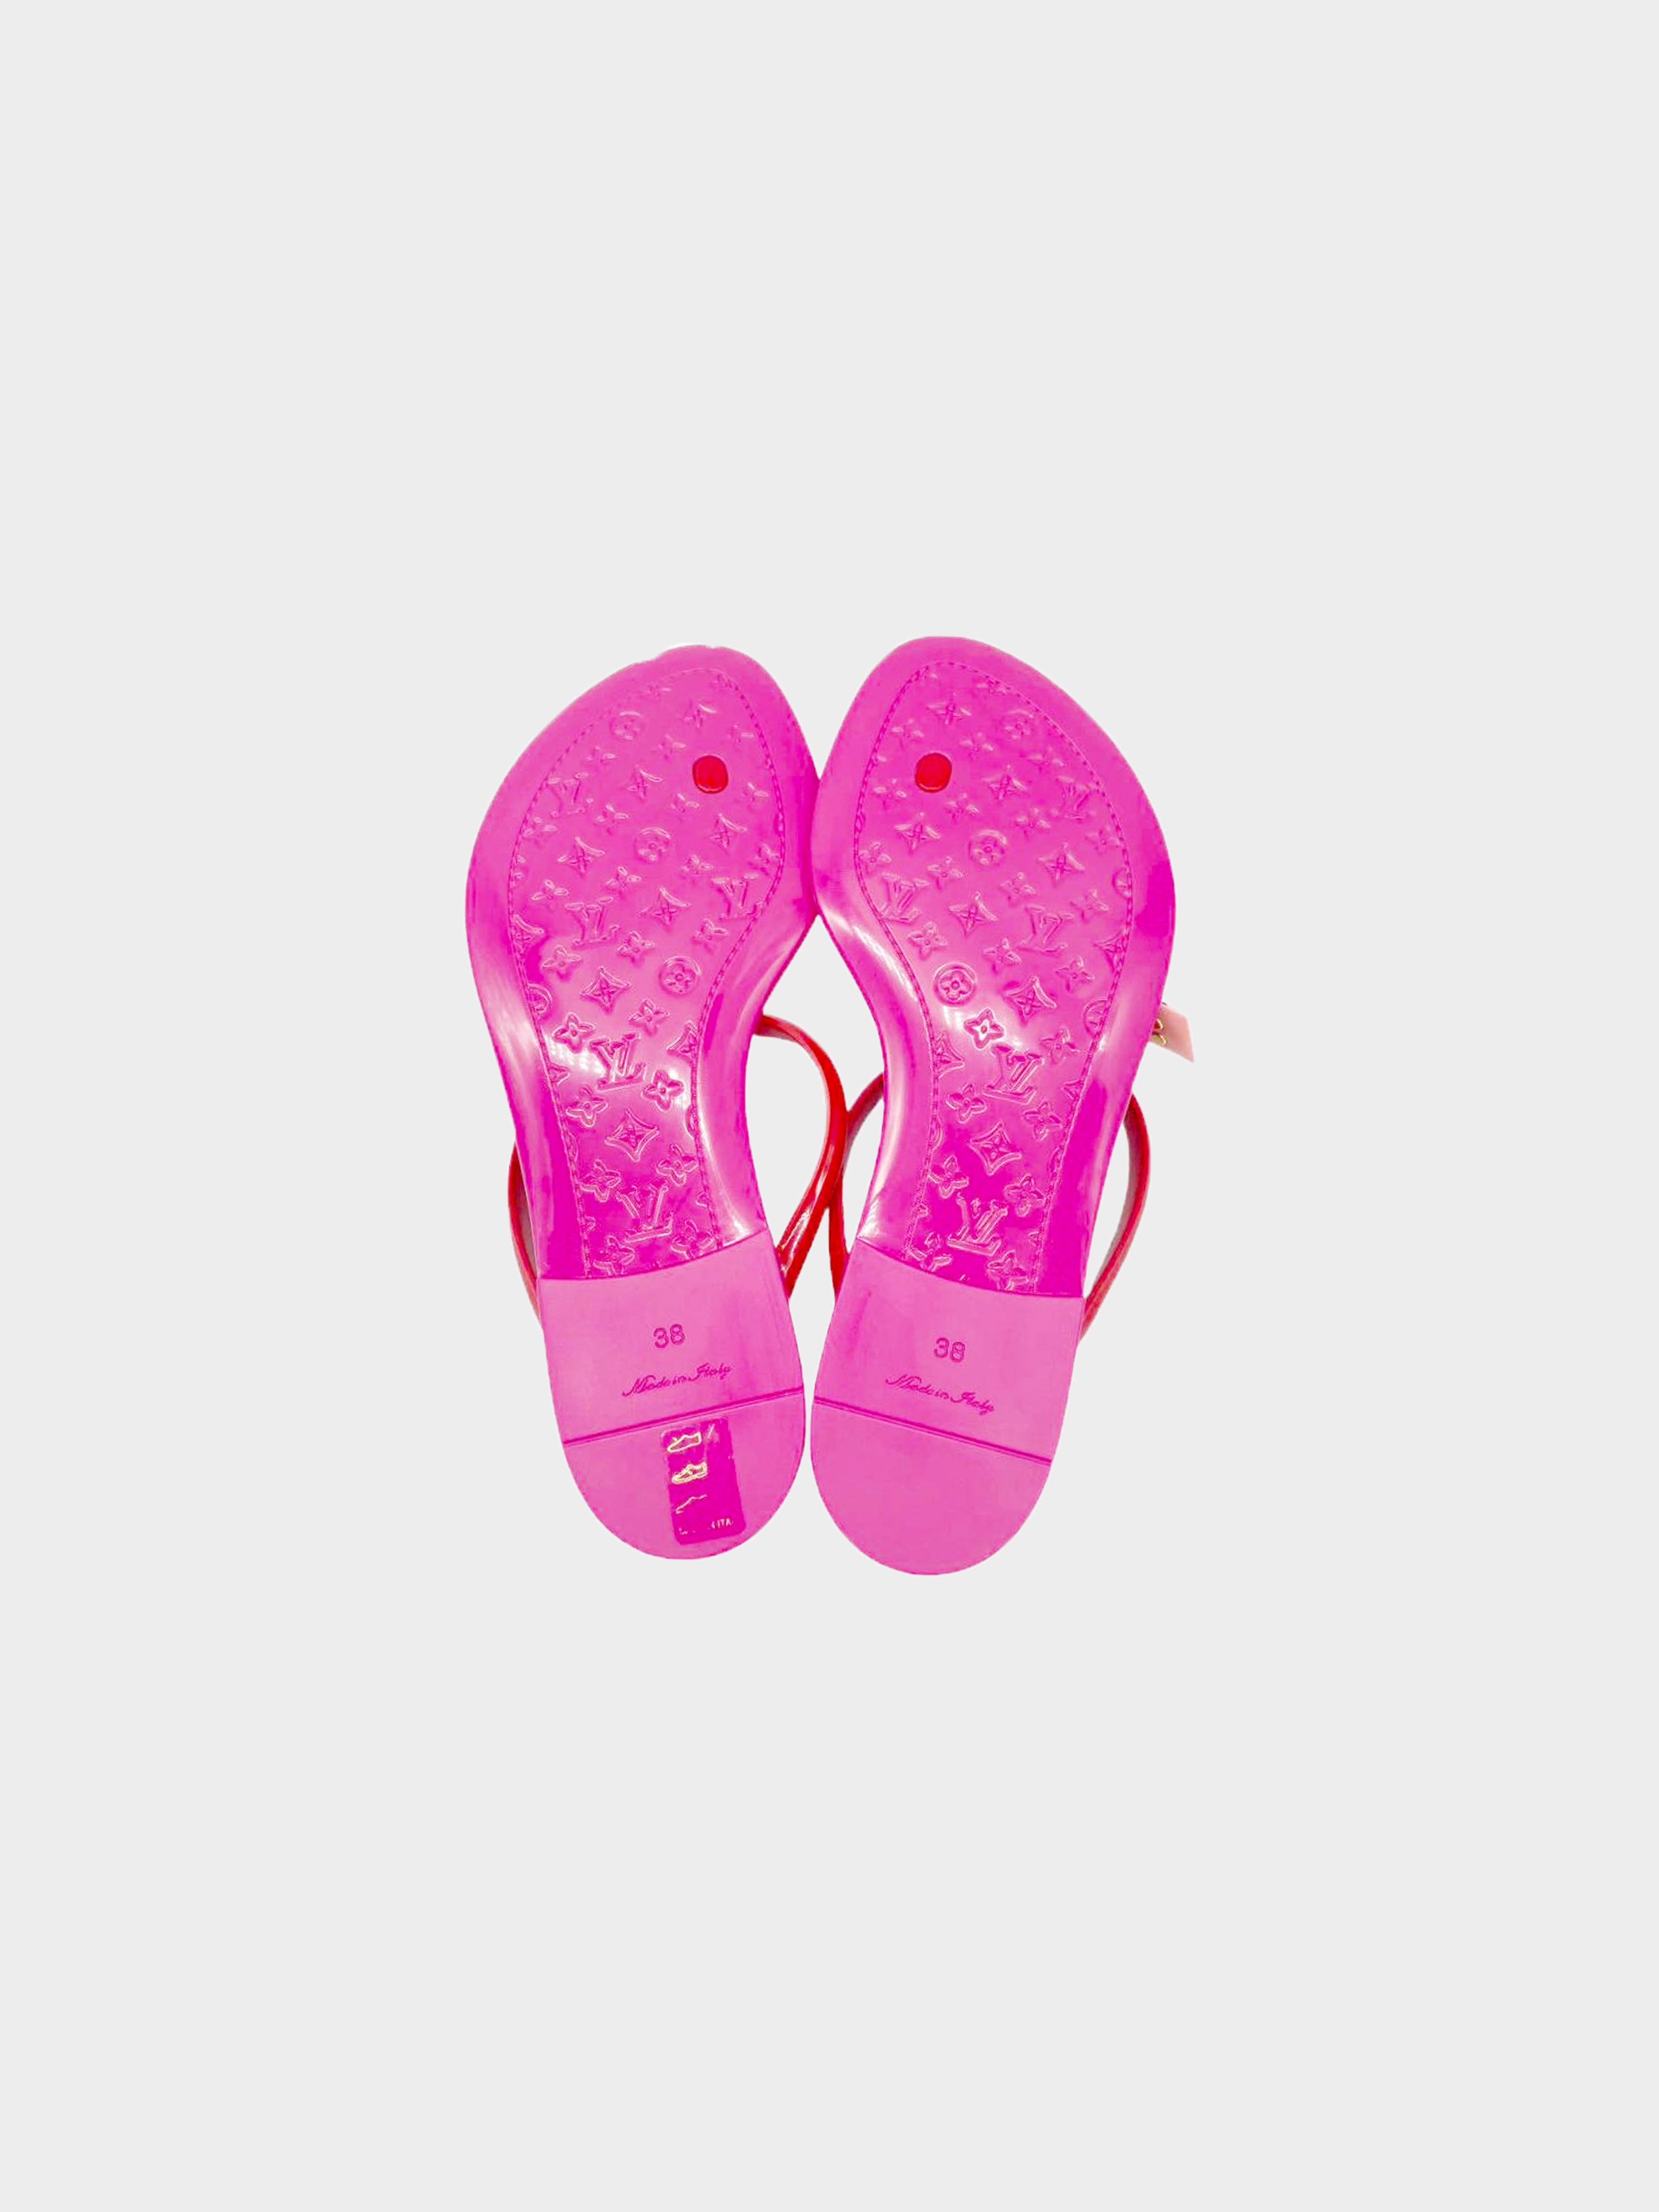 Louis Vuitton 2010s Pink Jelly Seastar Thong Sandals